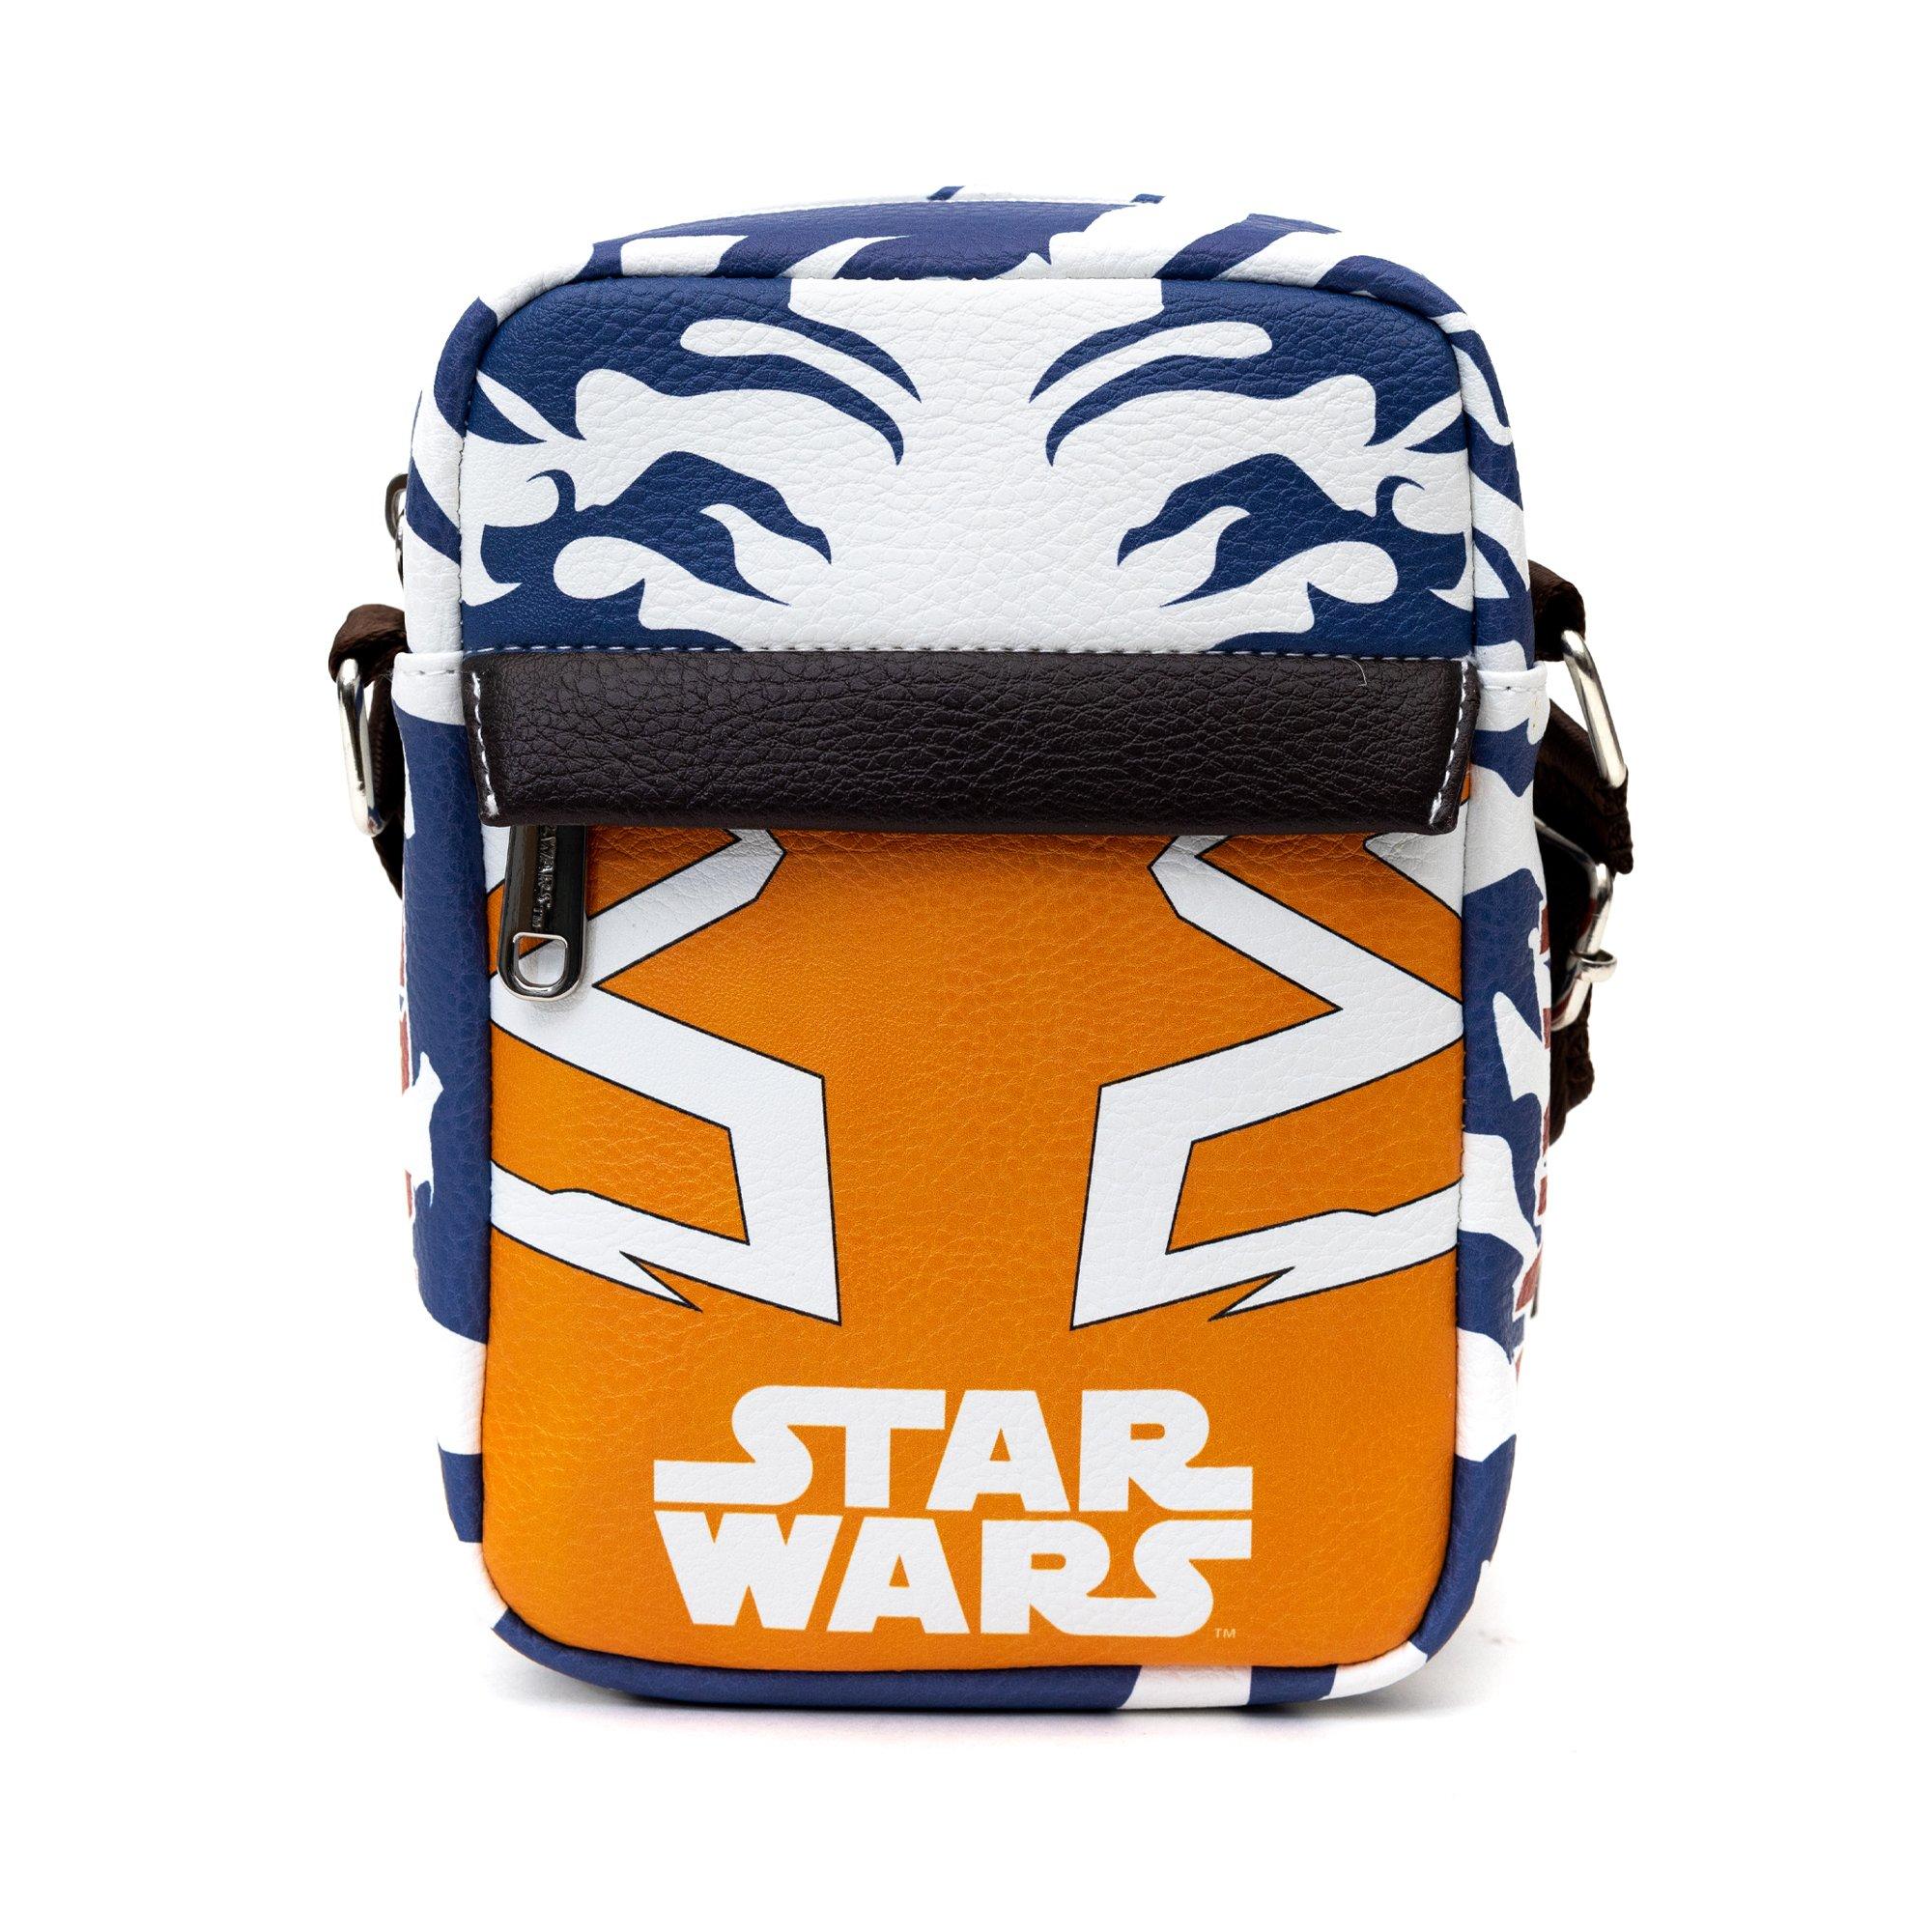 Star Wars Buckle-Down Crossbody Bag